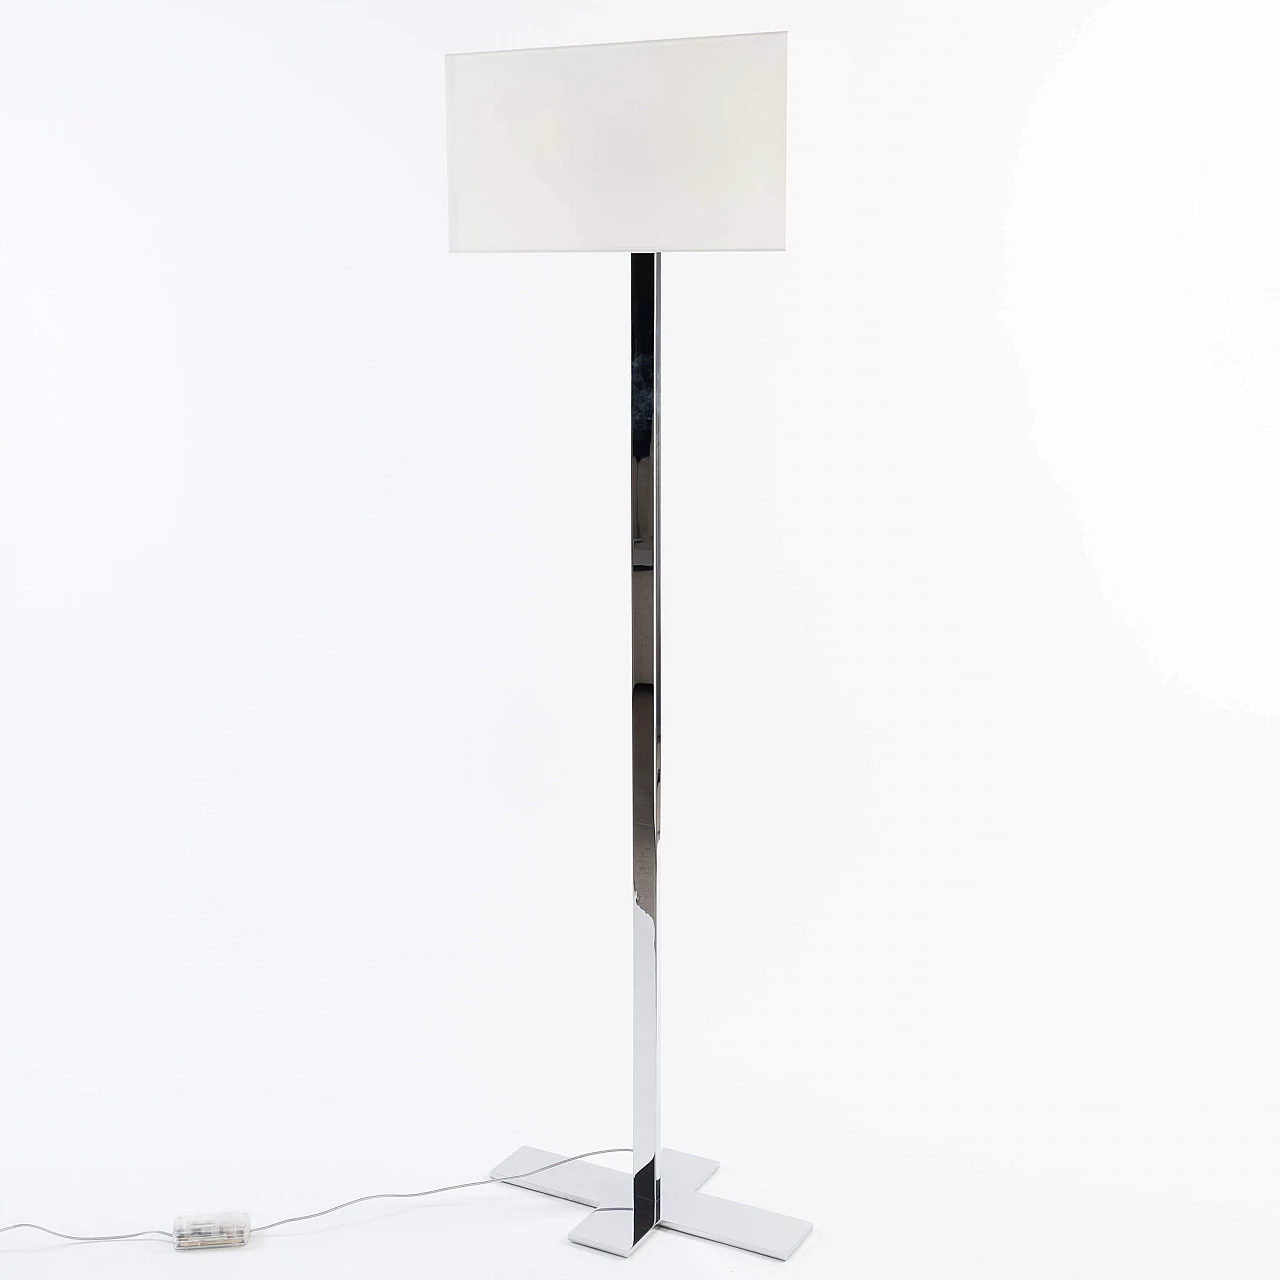 Leukon lamp by Antonio Citterio for Maxalto 1